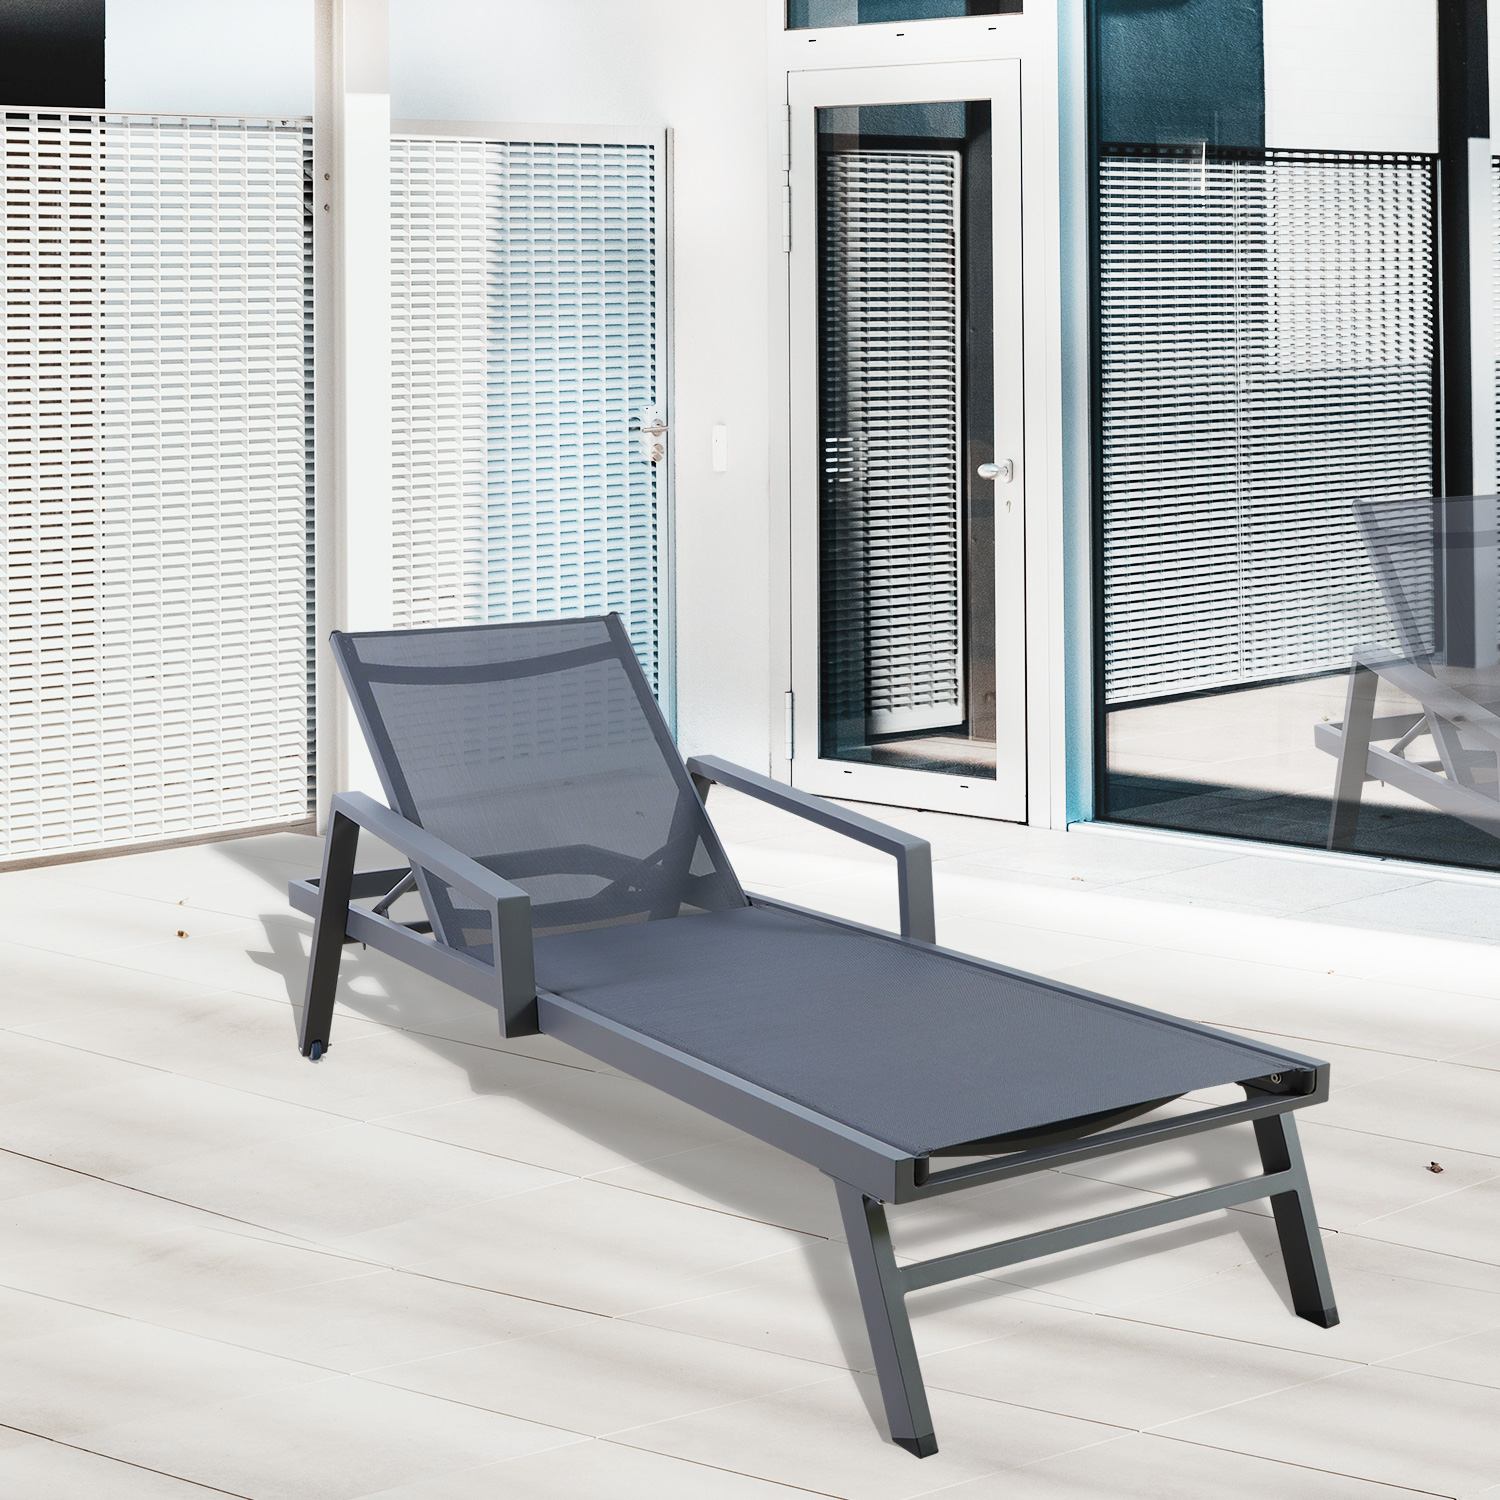 Verstellbare Outdoor-Chaiselongue aus Aluminium